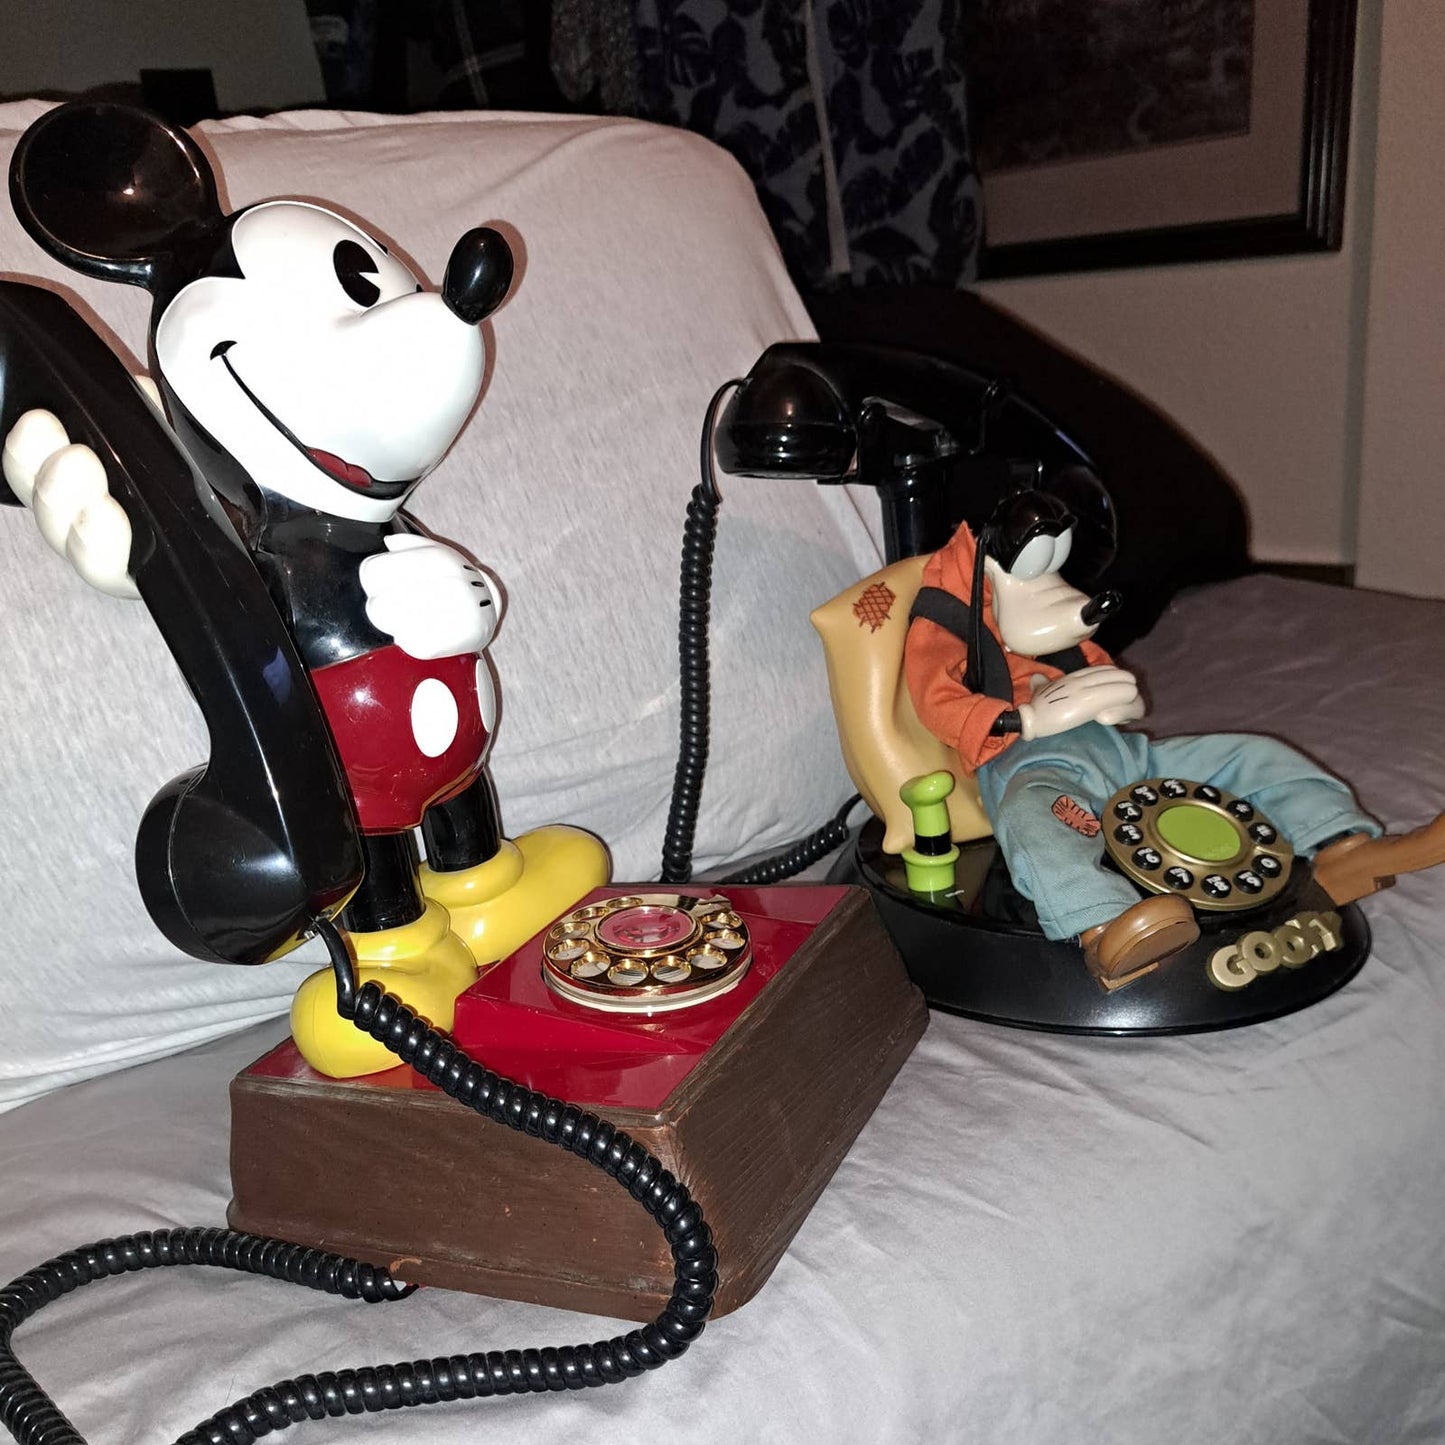 VINTAGE and WORKING Goofy and Mickey Landline phones